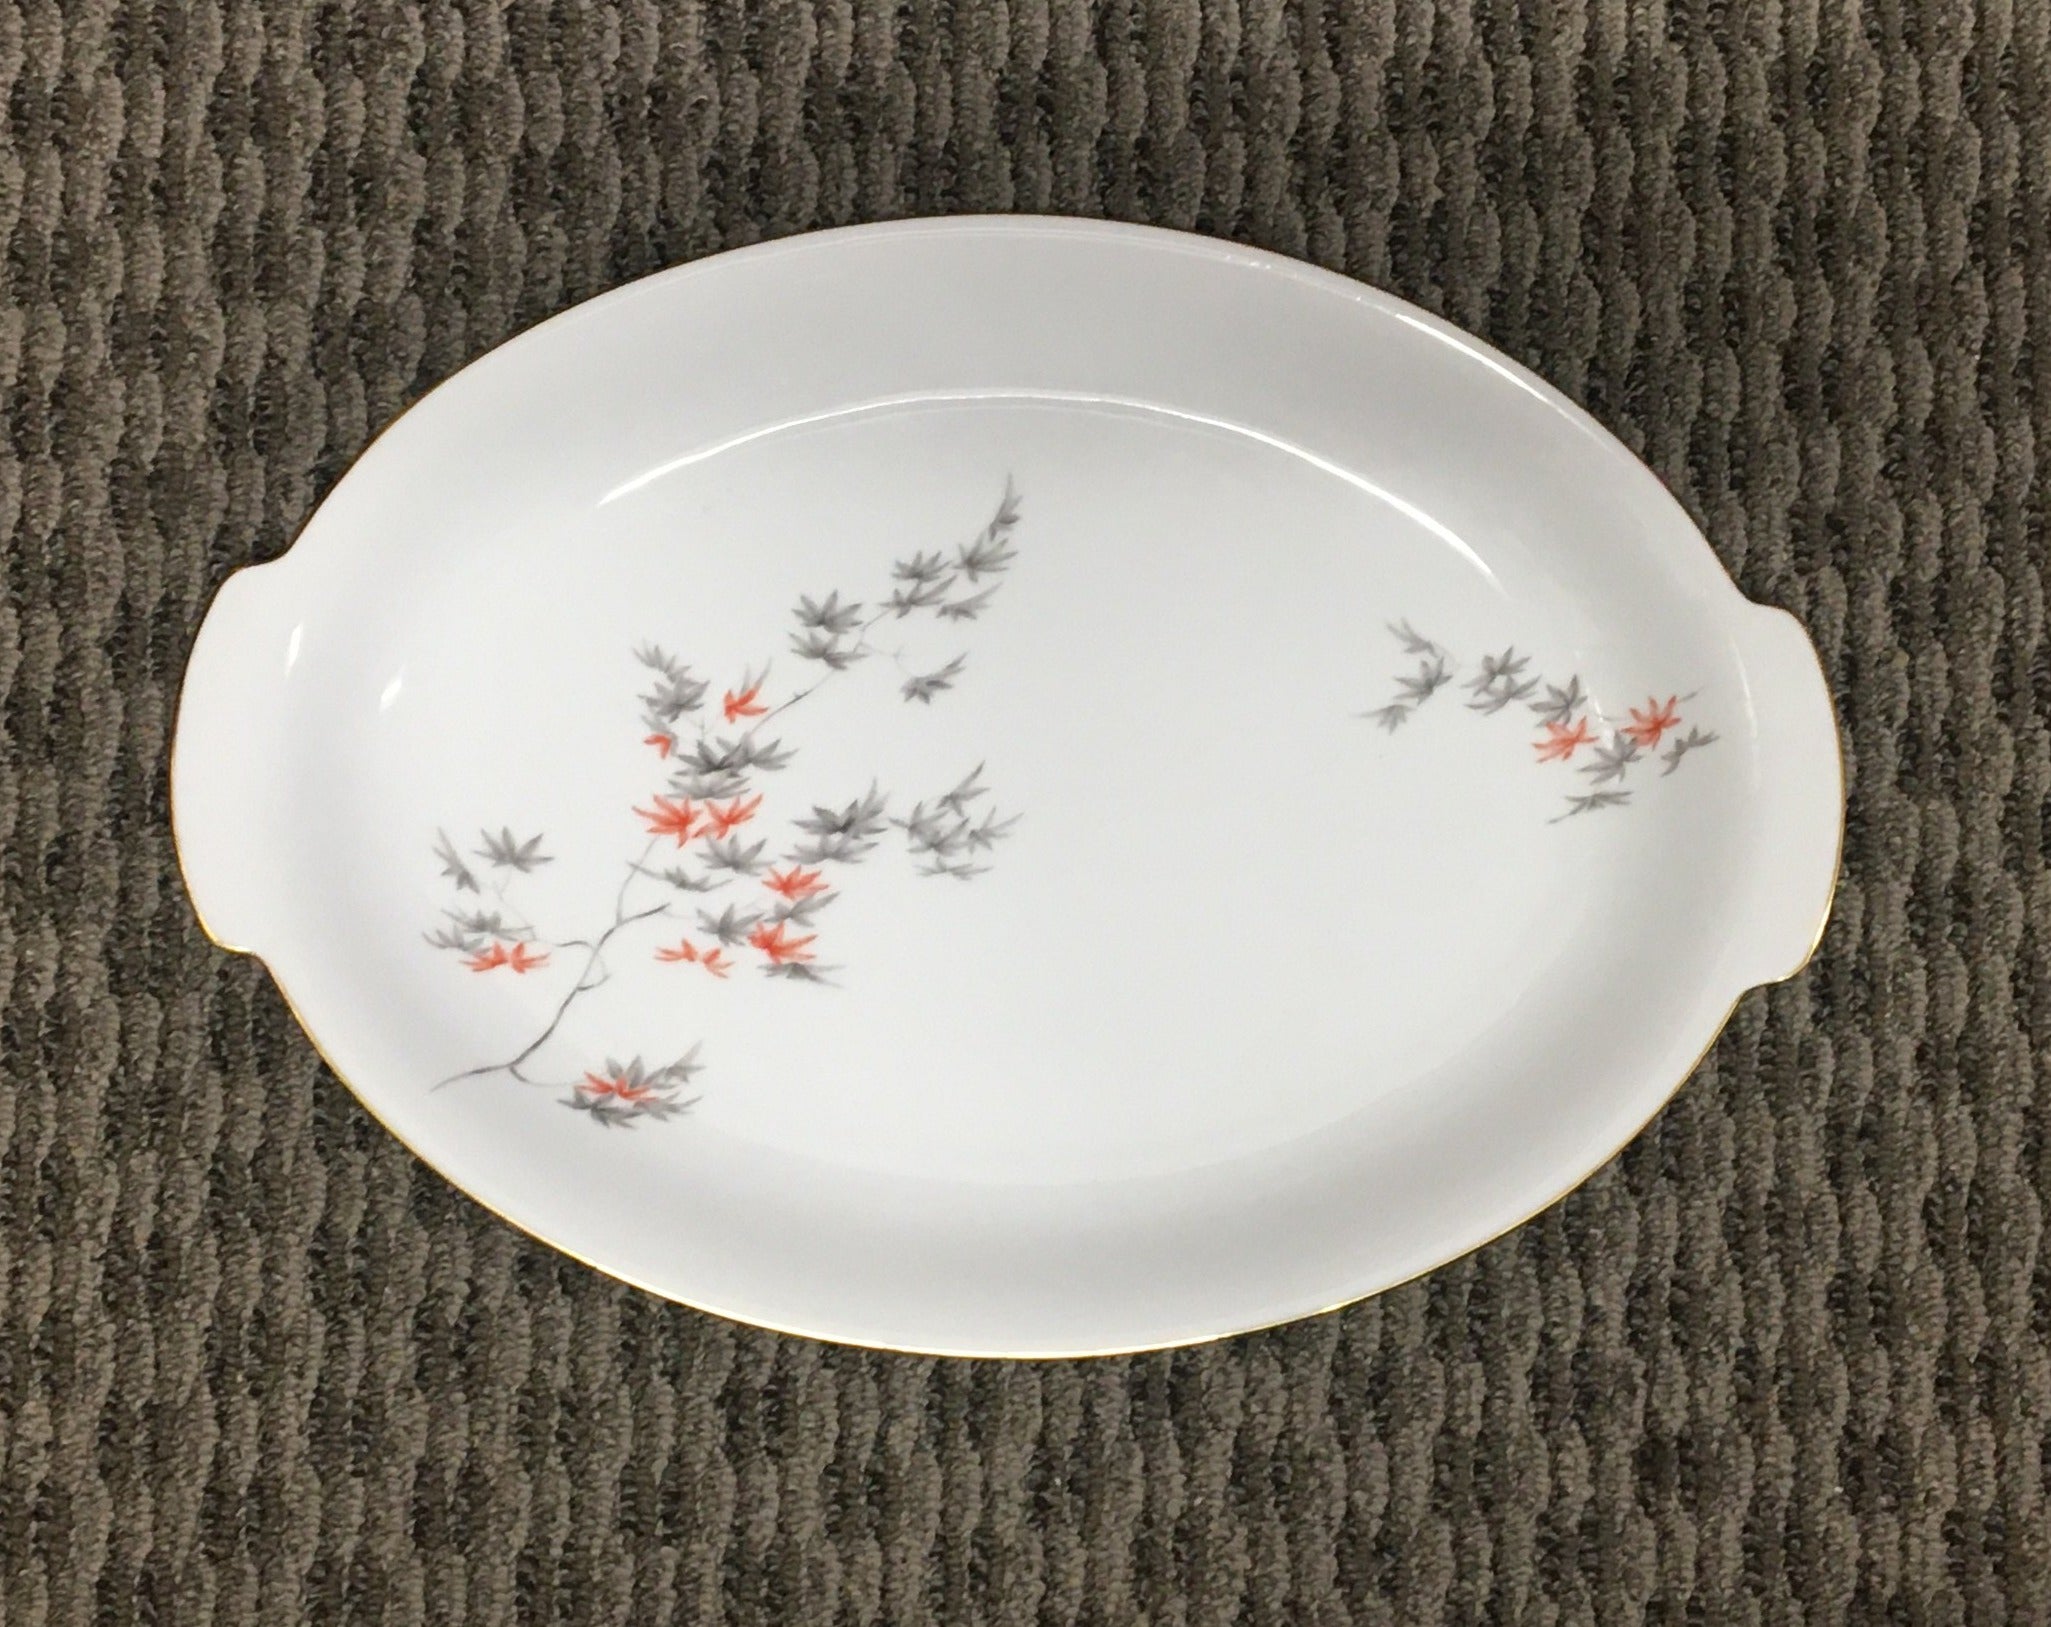 Sango china Maple pattern Large serving platter